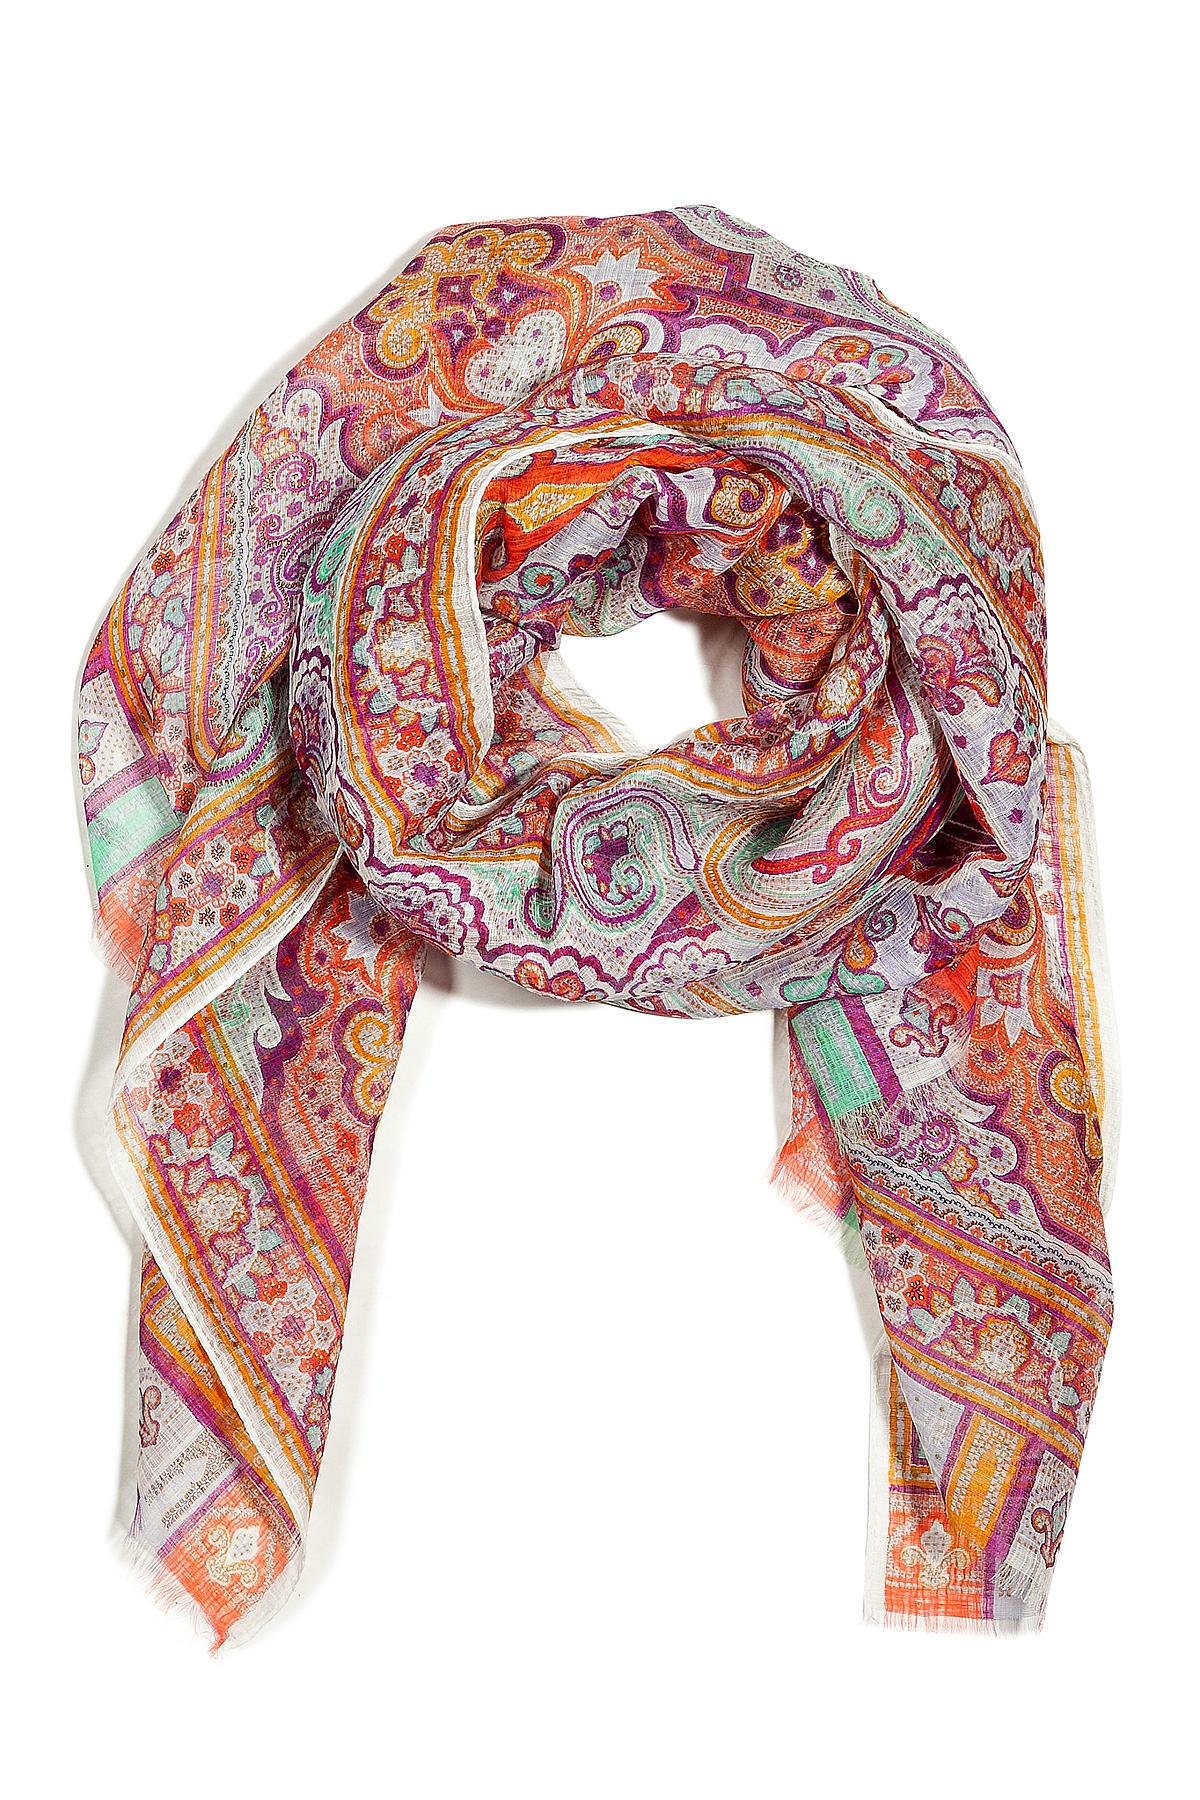 Etro Mandarin Multicolor Printed Linen and Silk Scarf in Multicolor | Lyst